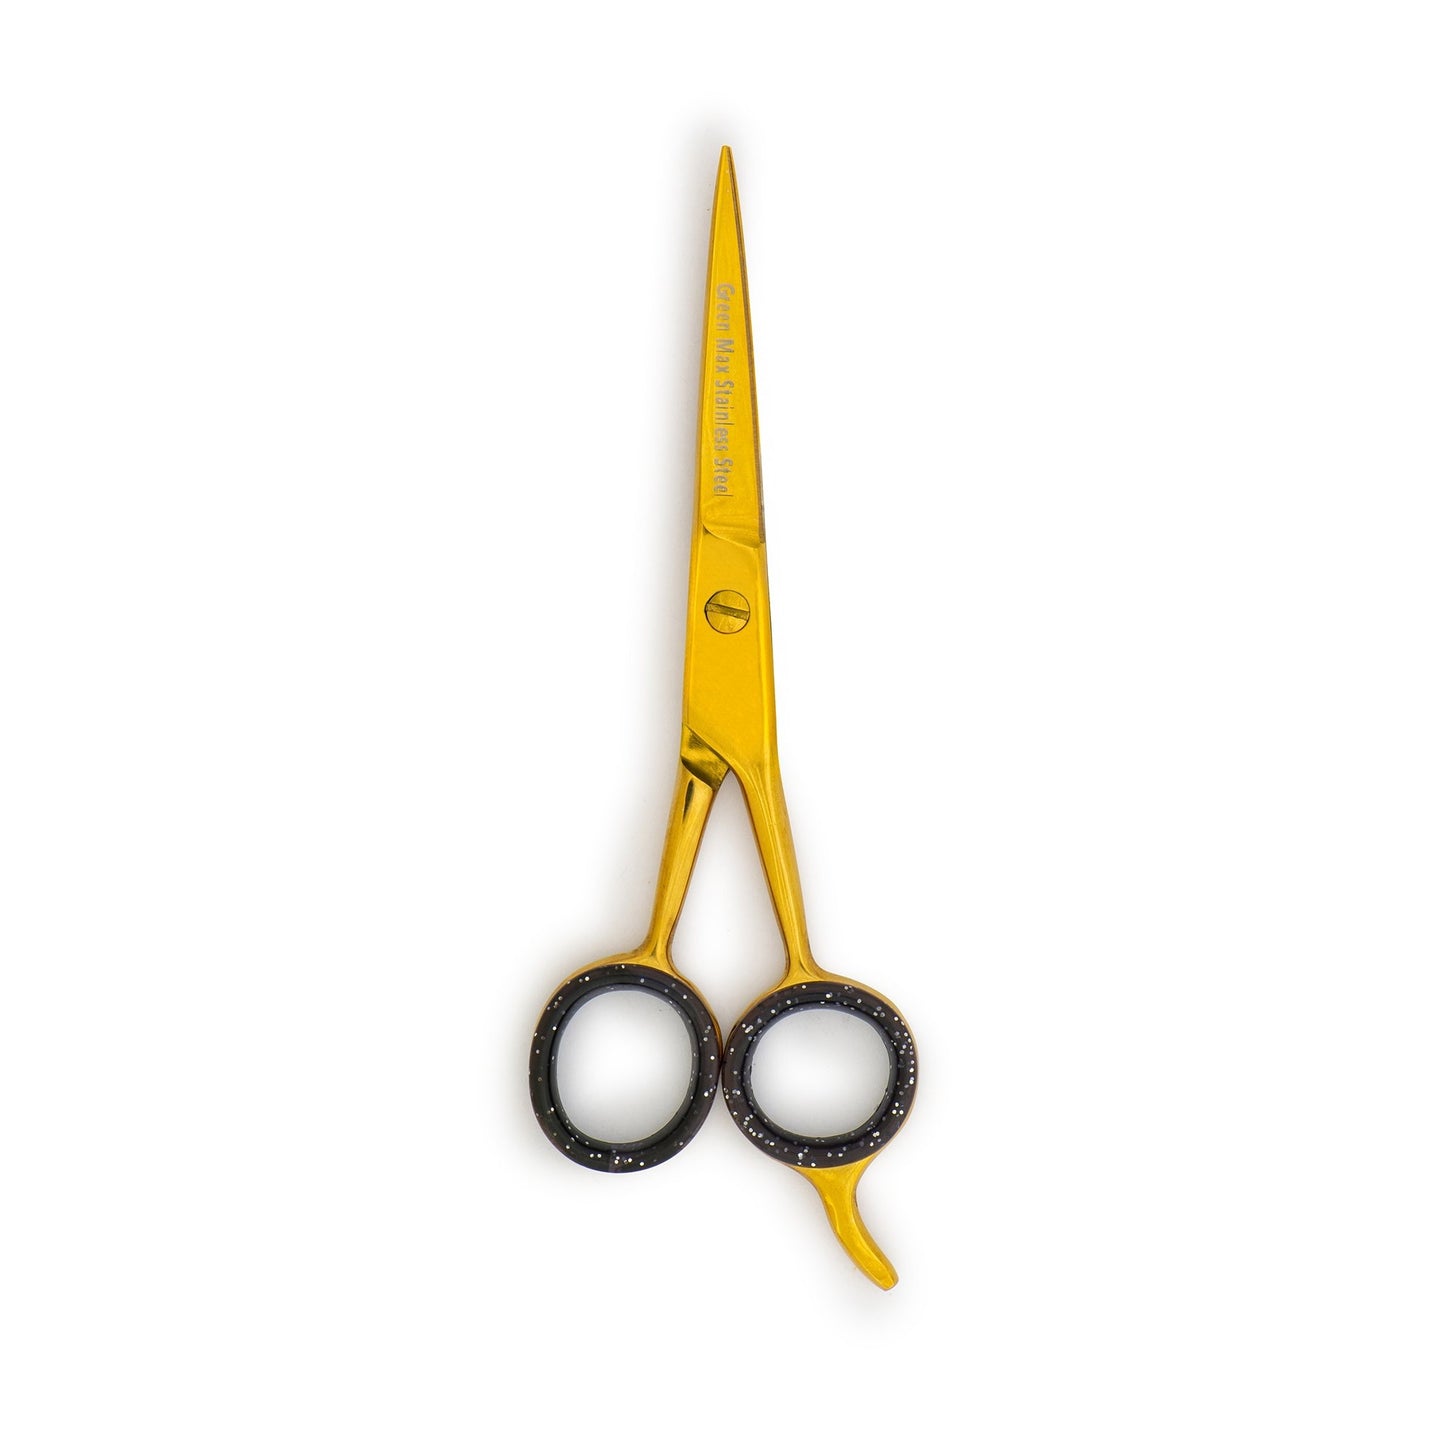 Hair Cutting Scissors , Razor Edge Professional Barber Shears.(GOLD) 5.5"